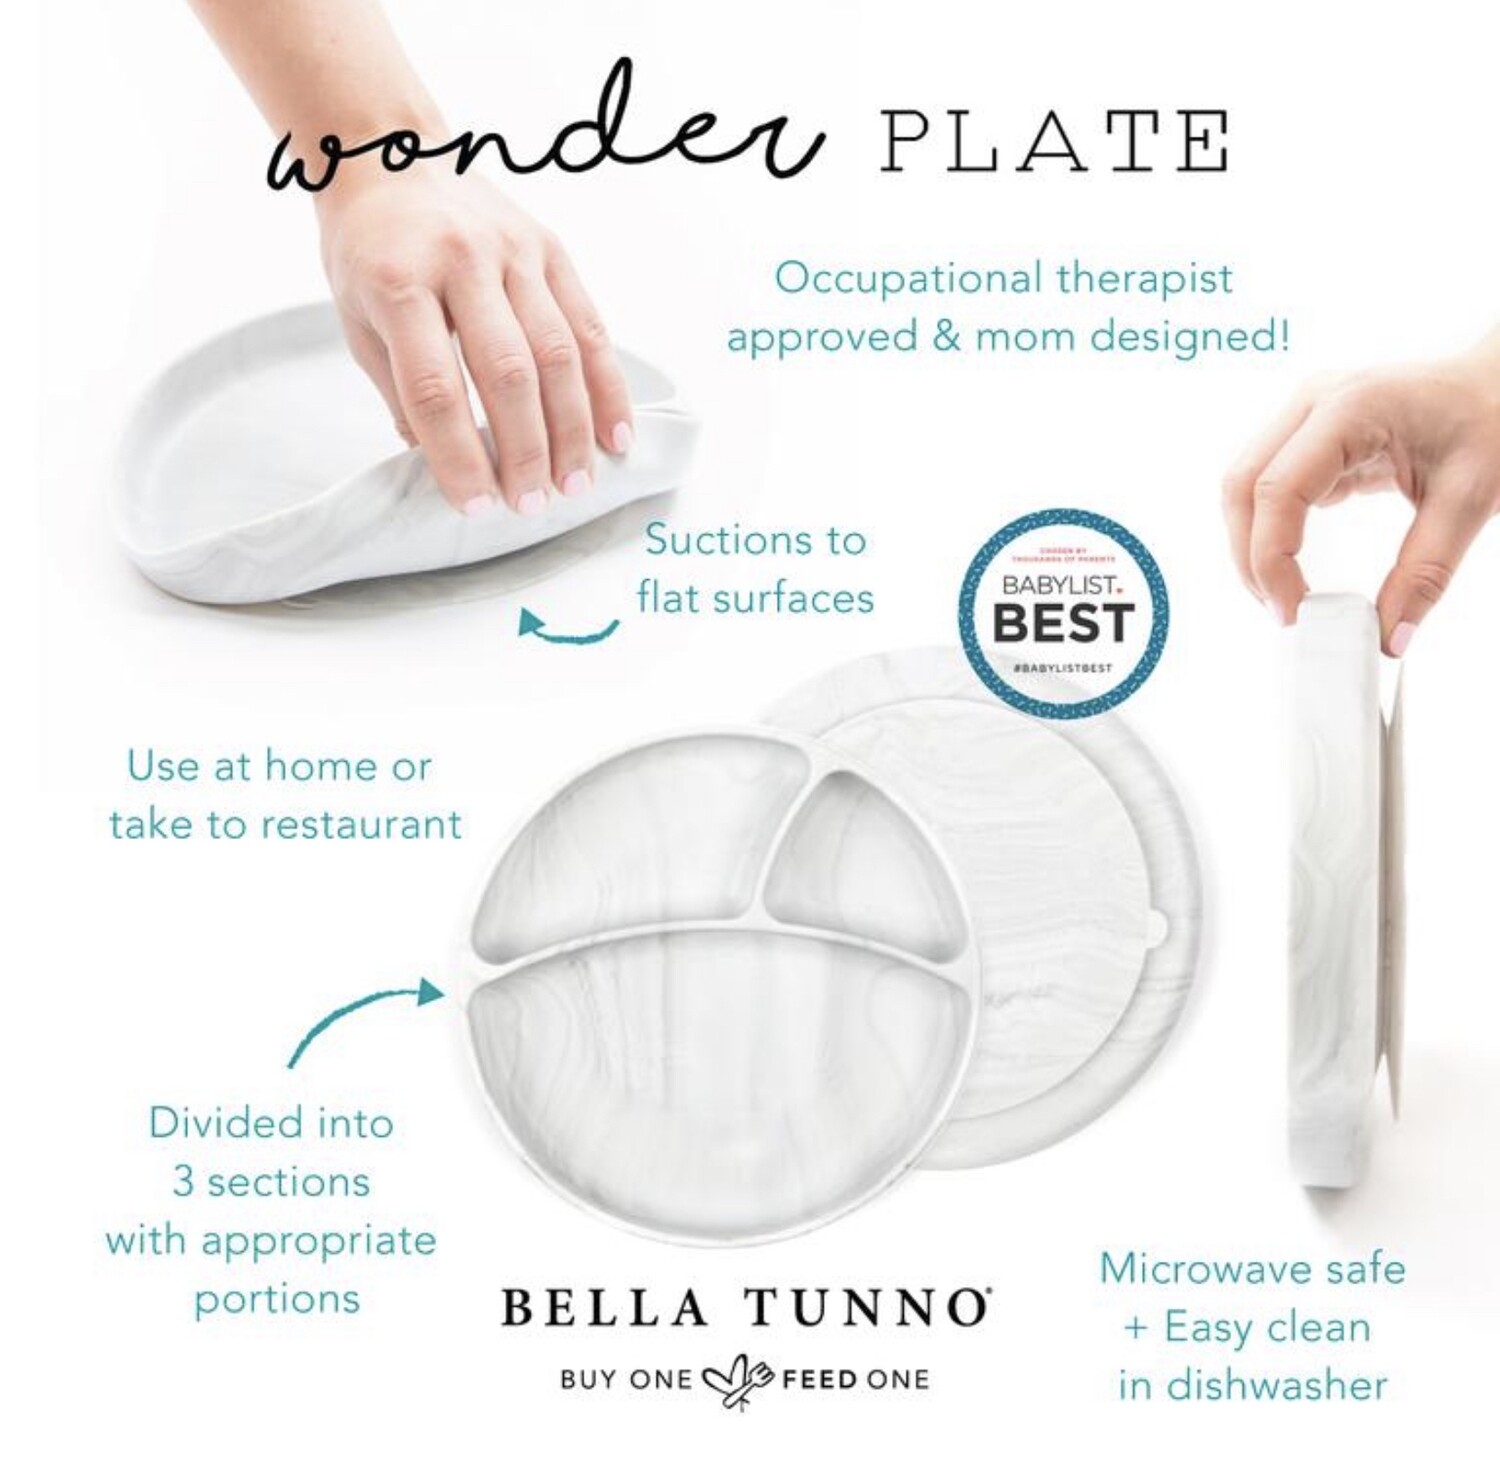 Bella Tunno Suction Wonder Plate